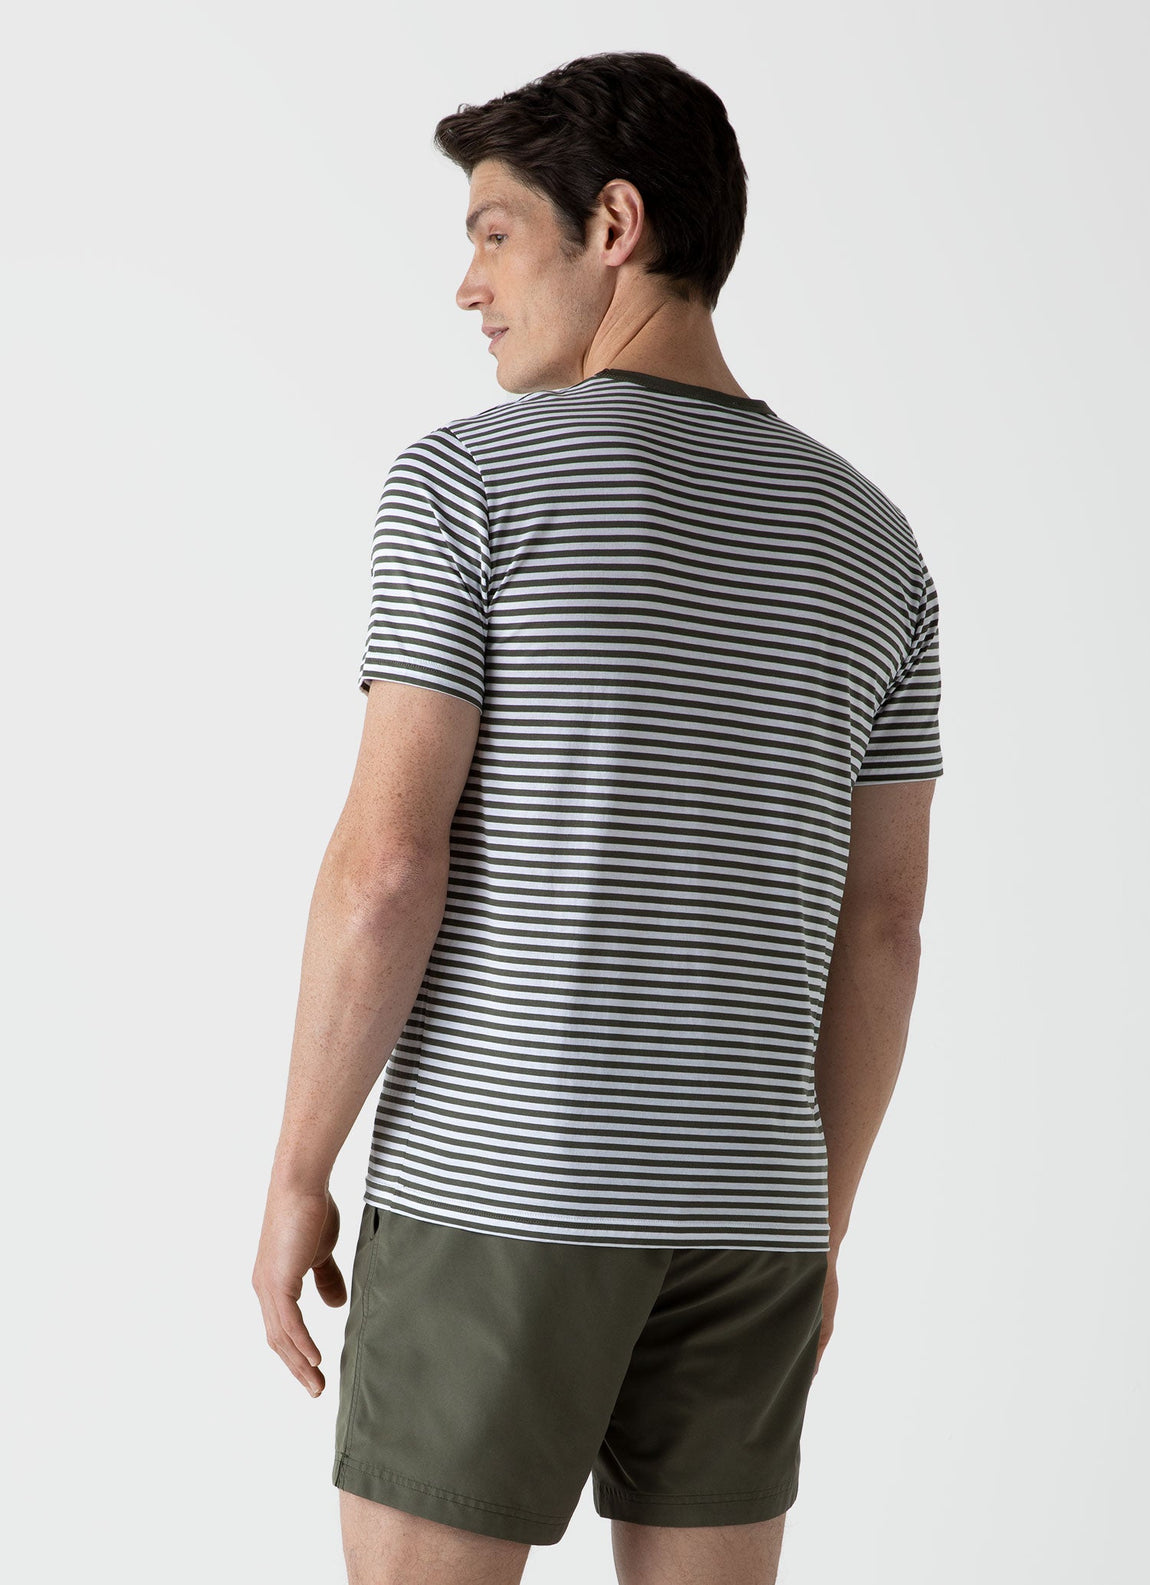 Men's Classic T-shirt in Hunter Green/White English Stripe